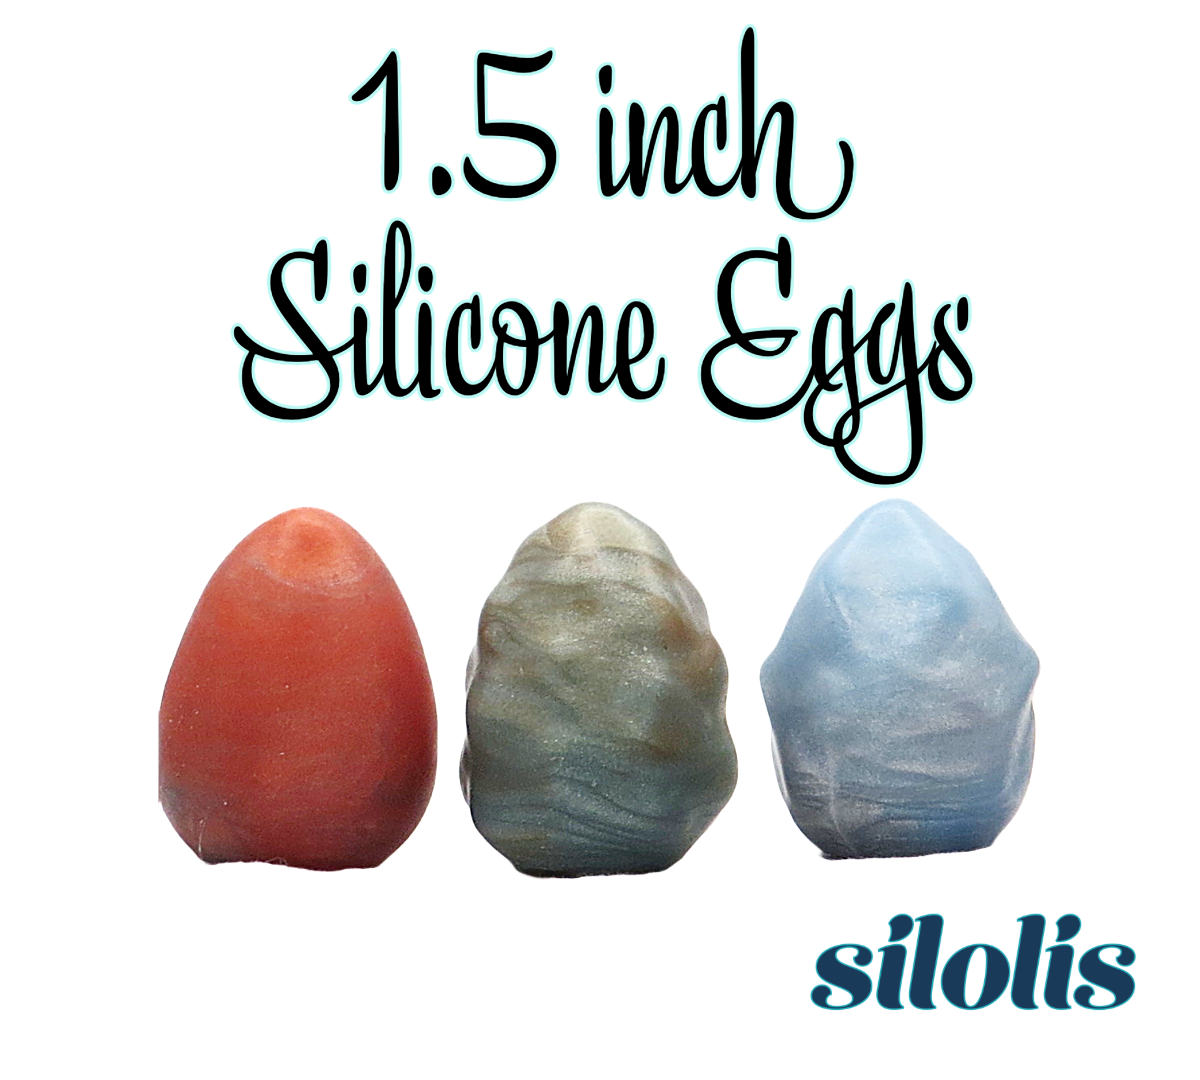 Small Eggs (1.5")